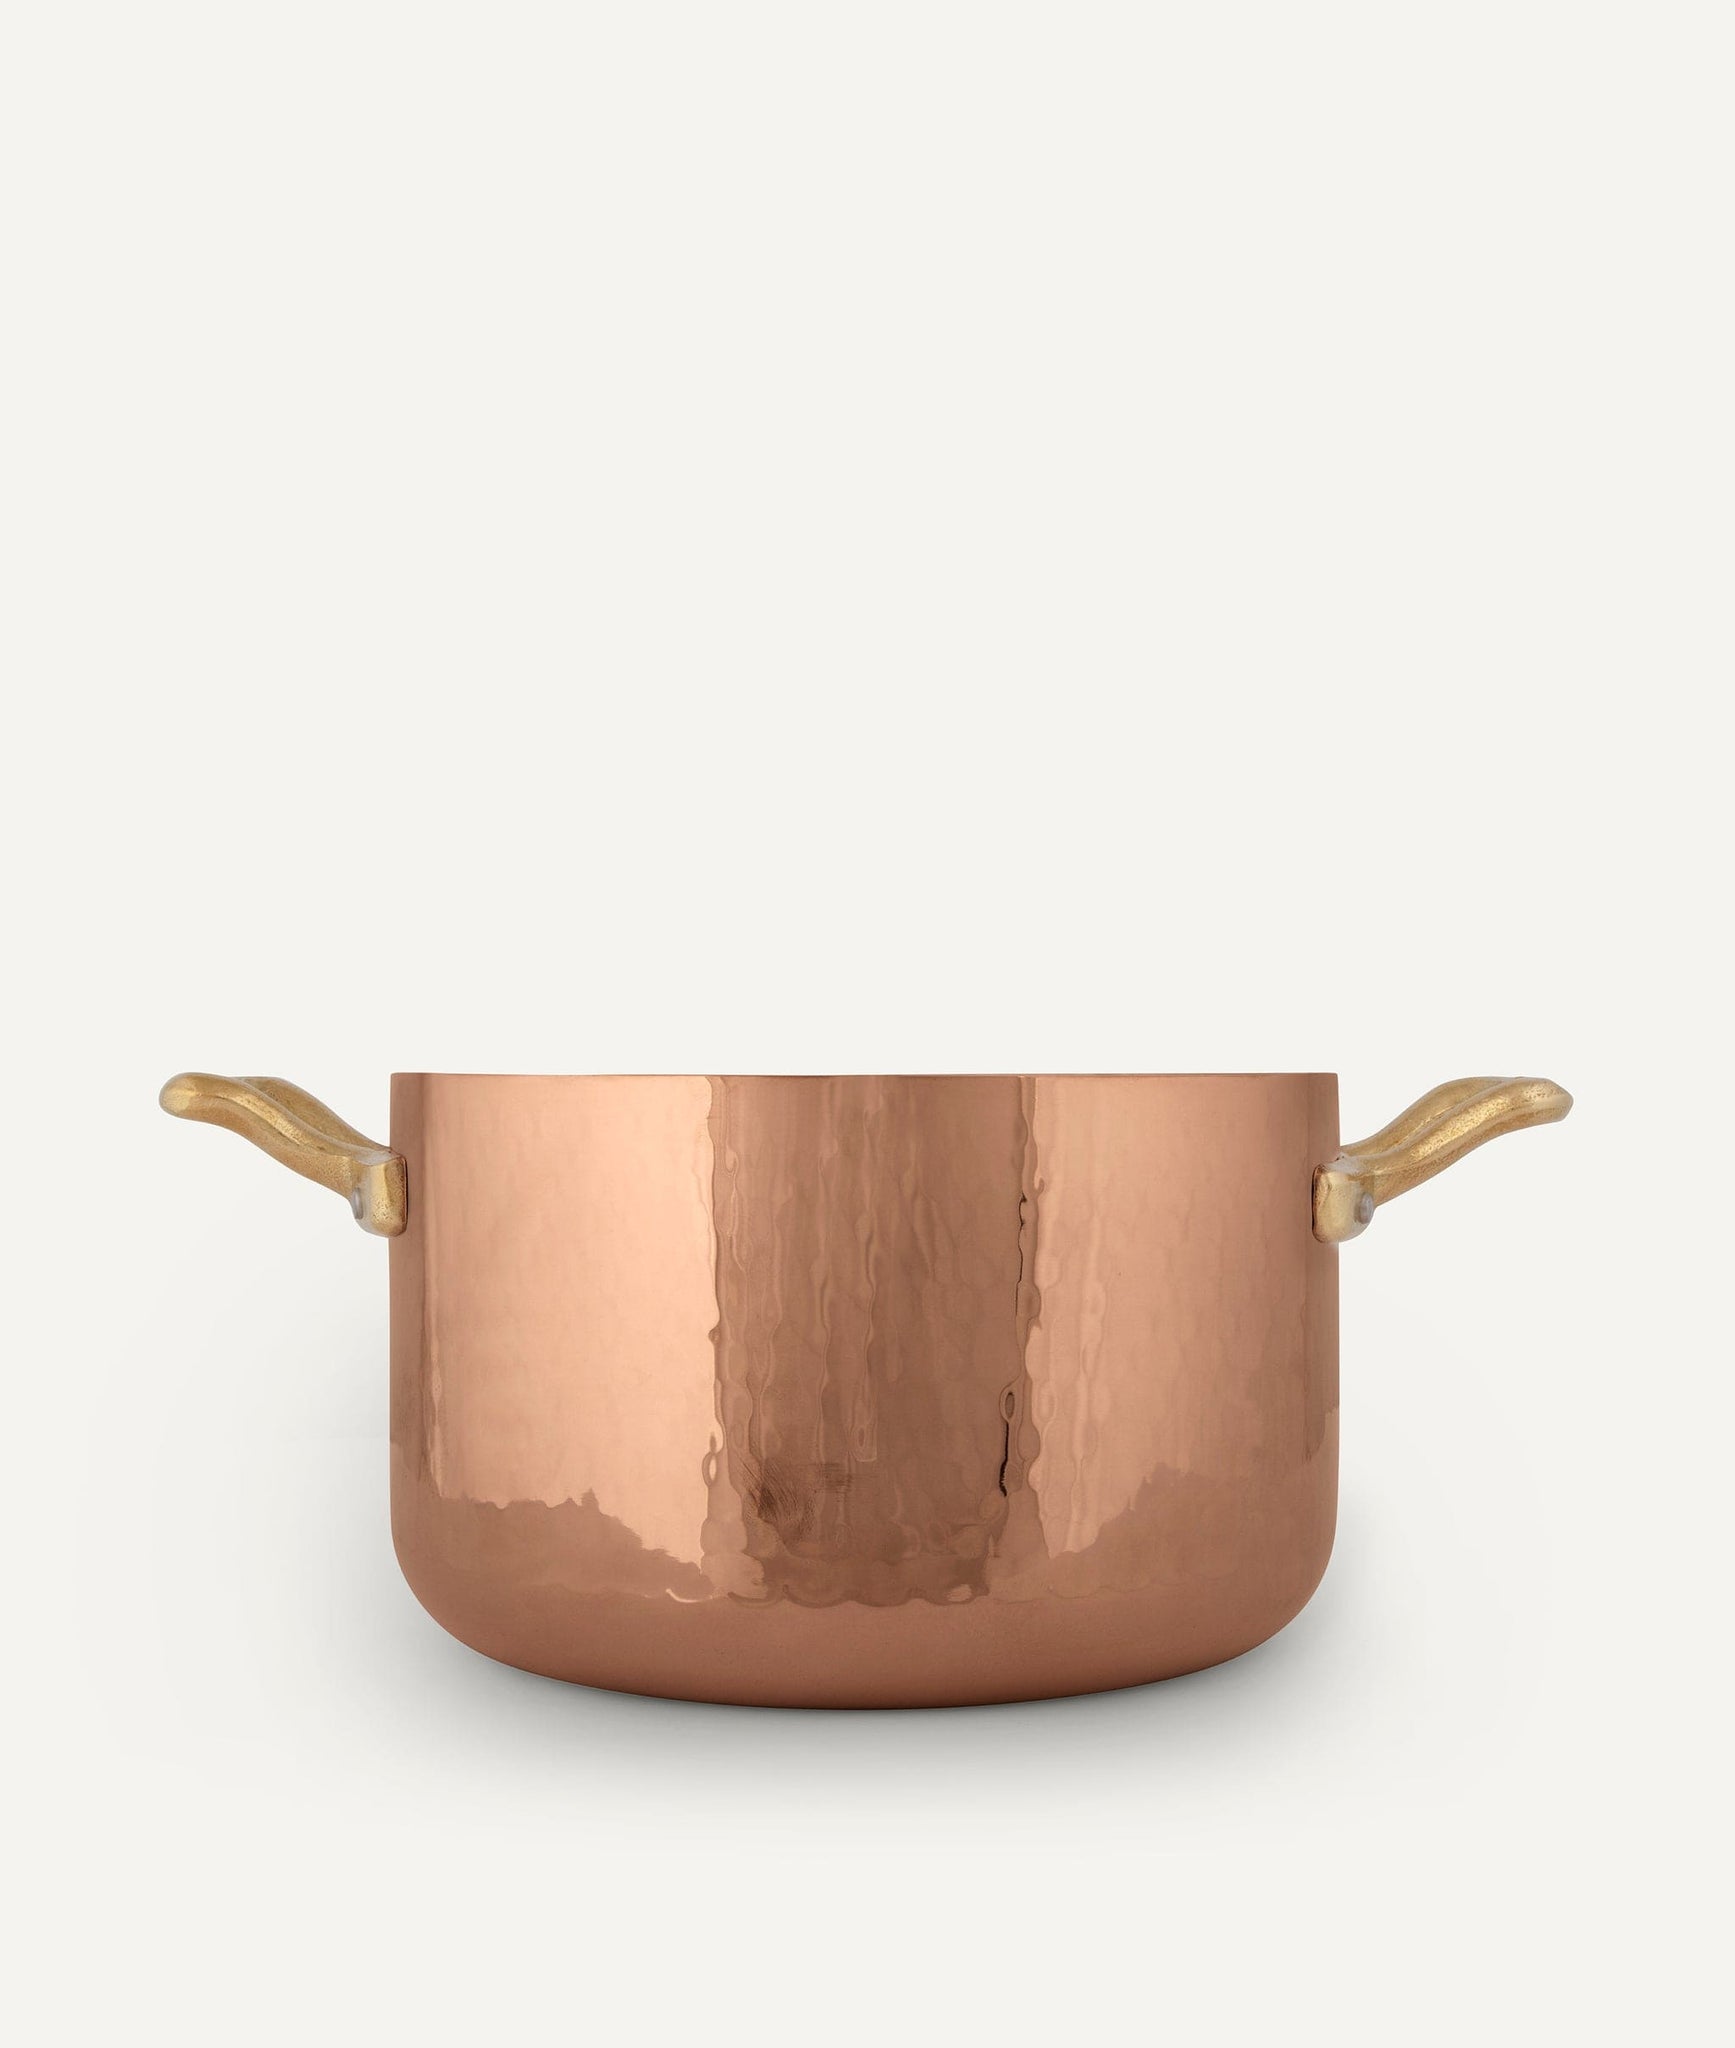 Saucepot in tinned copper